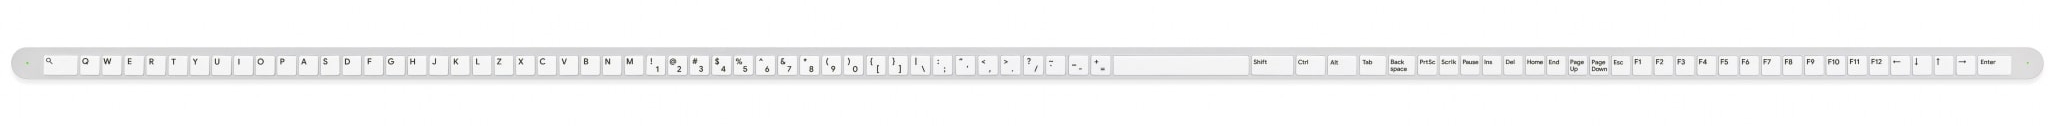 Google Japan Created a Single Row Keyboard Called the GBoard